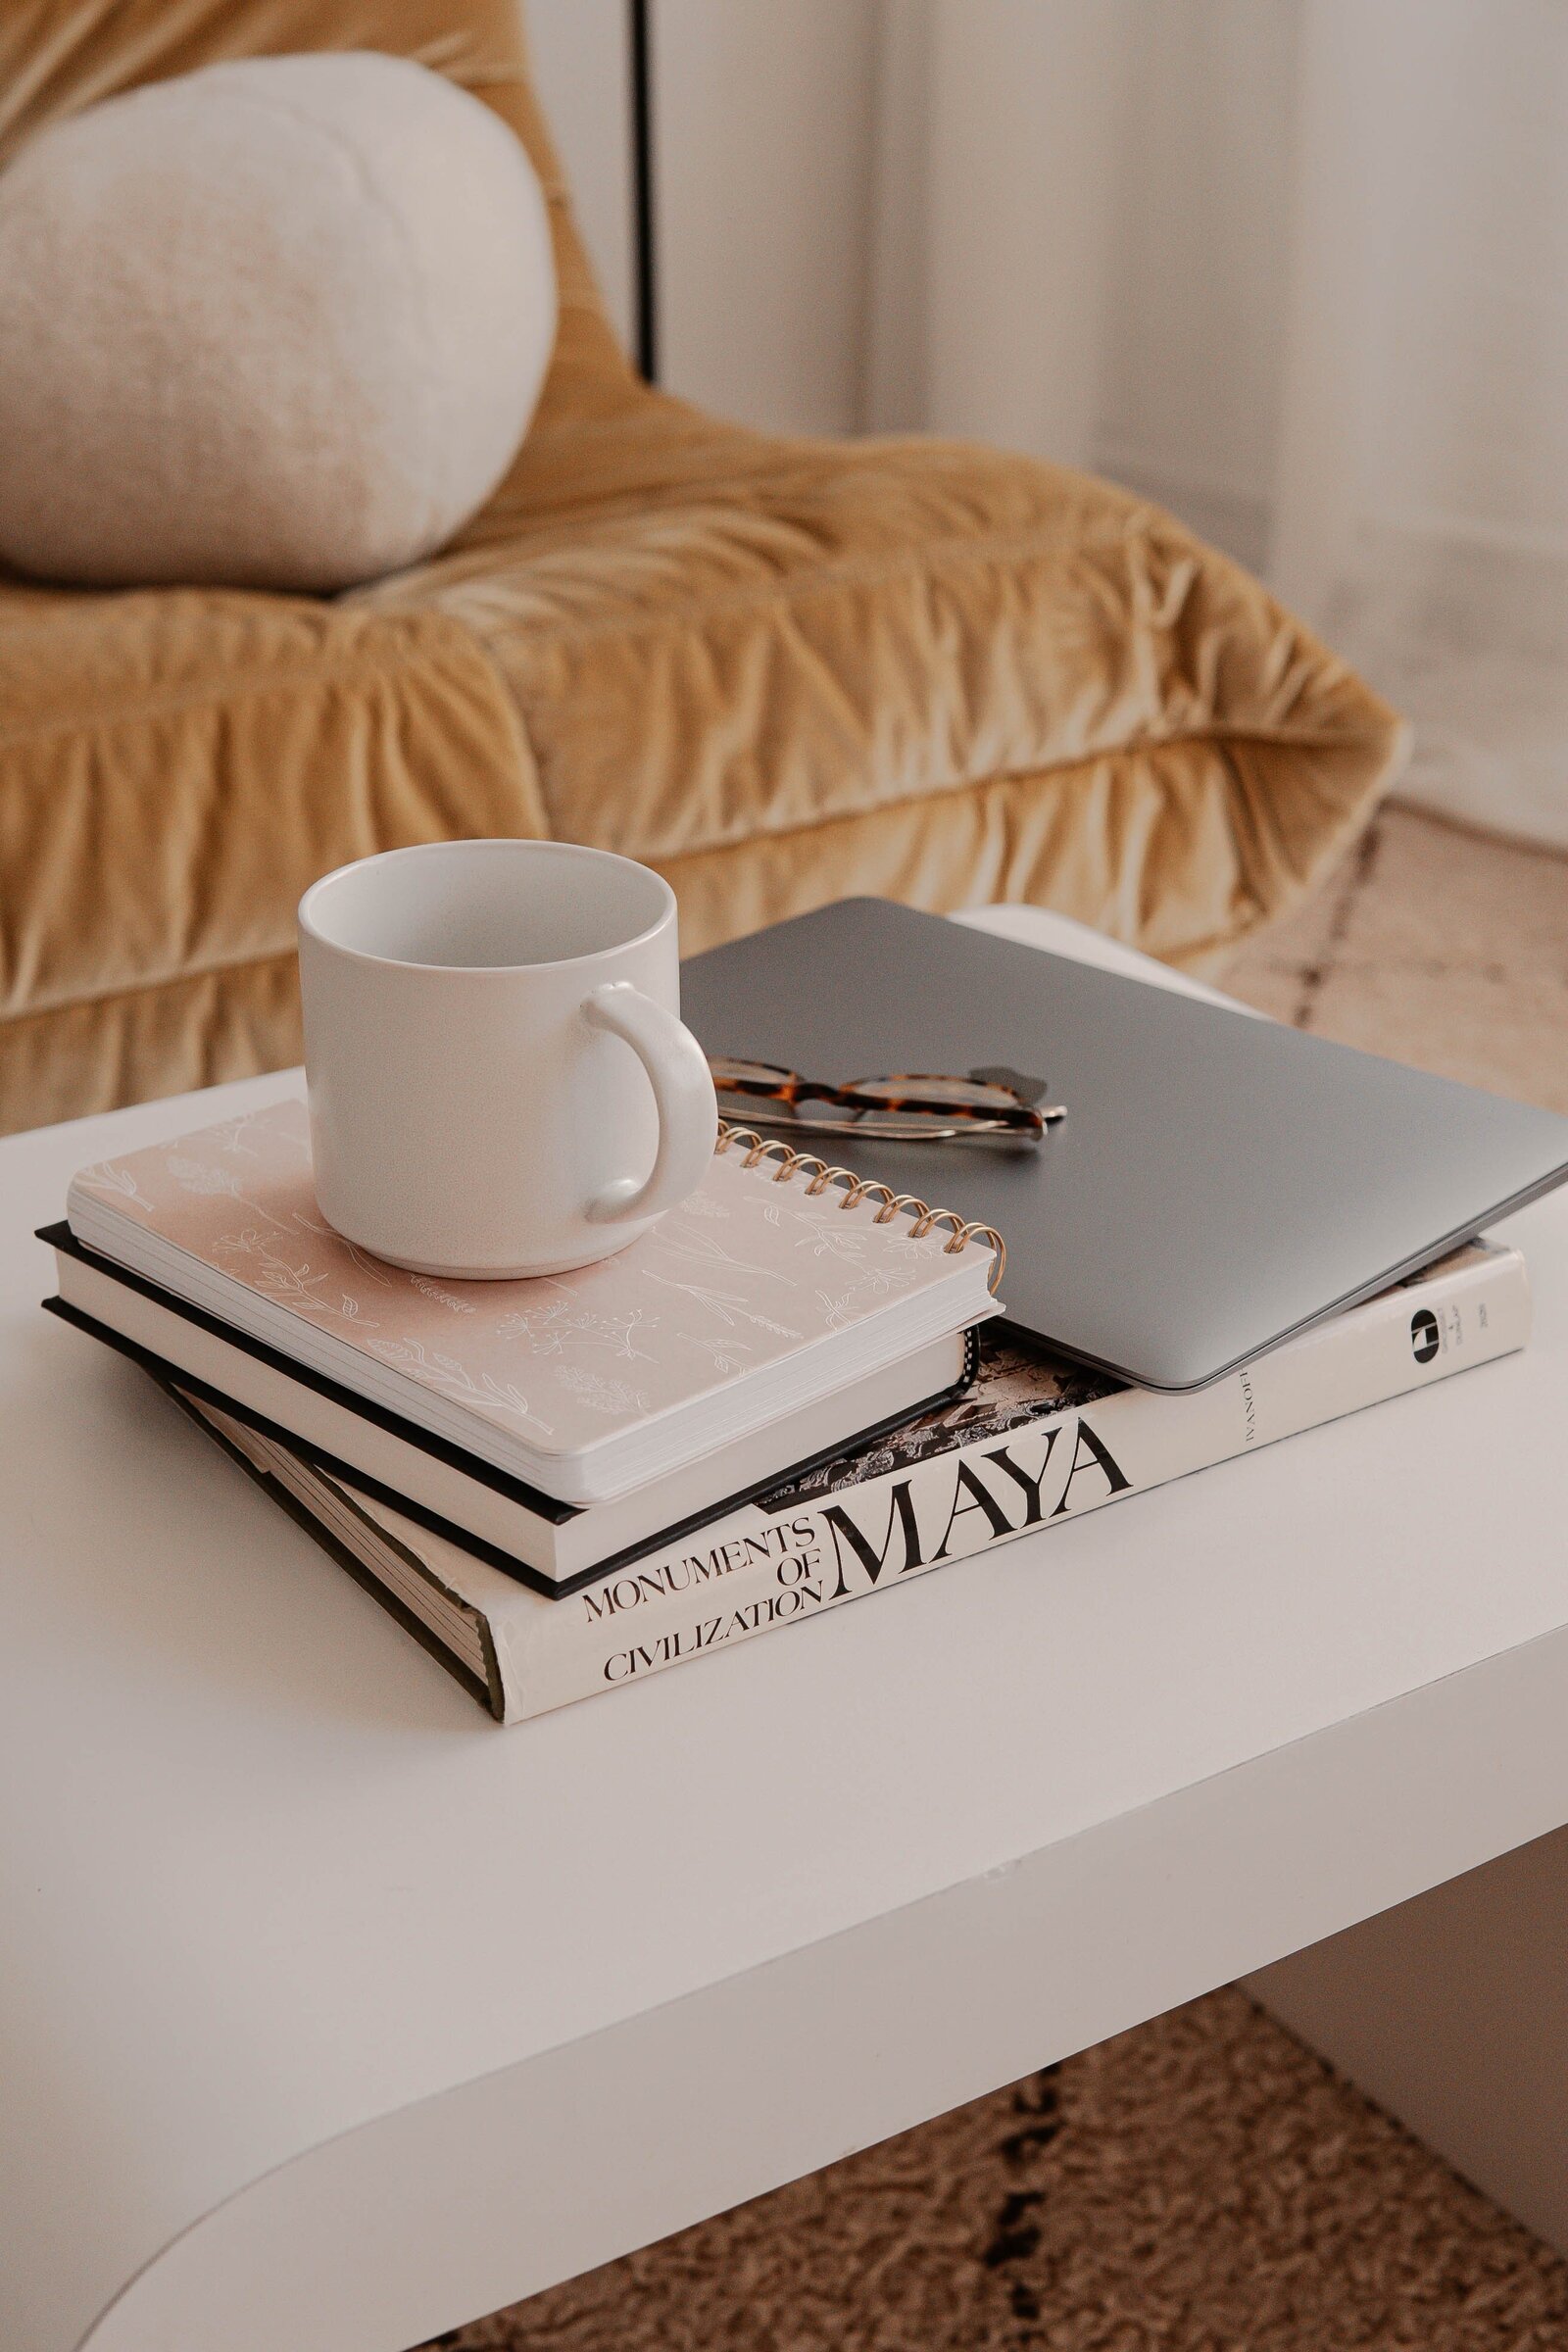 Coffee mug and coffee table books